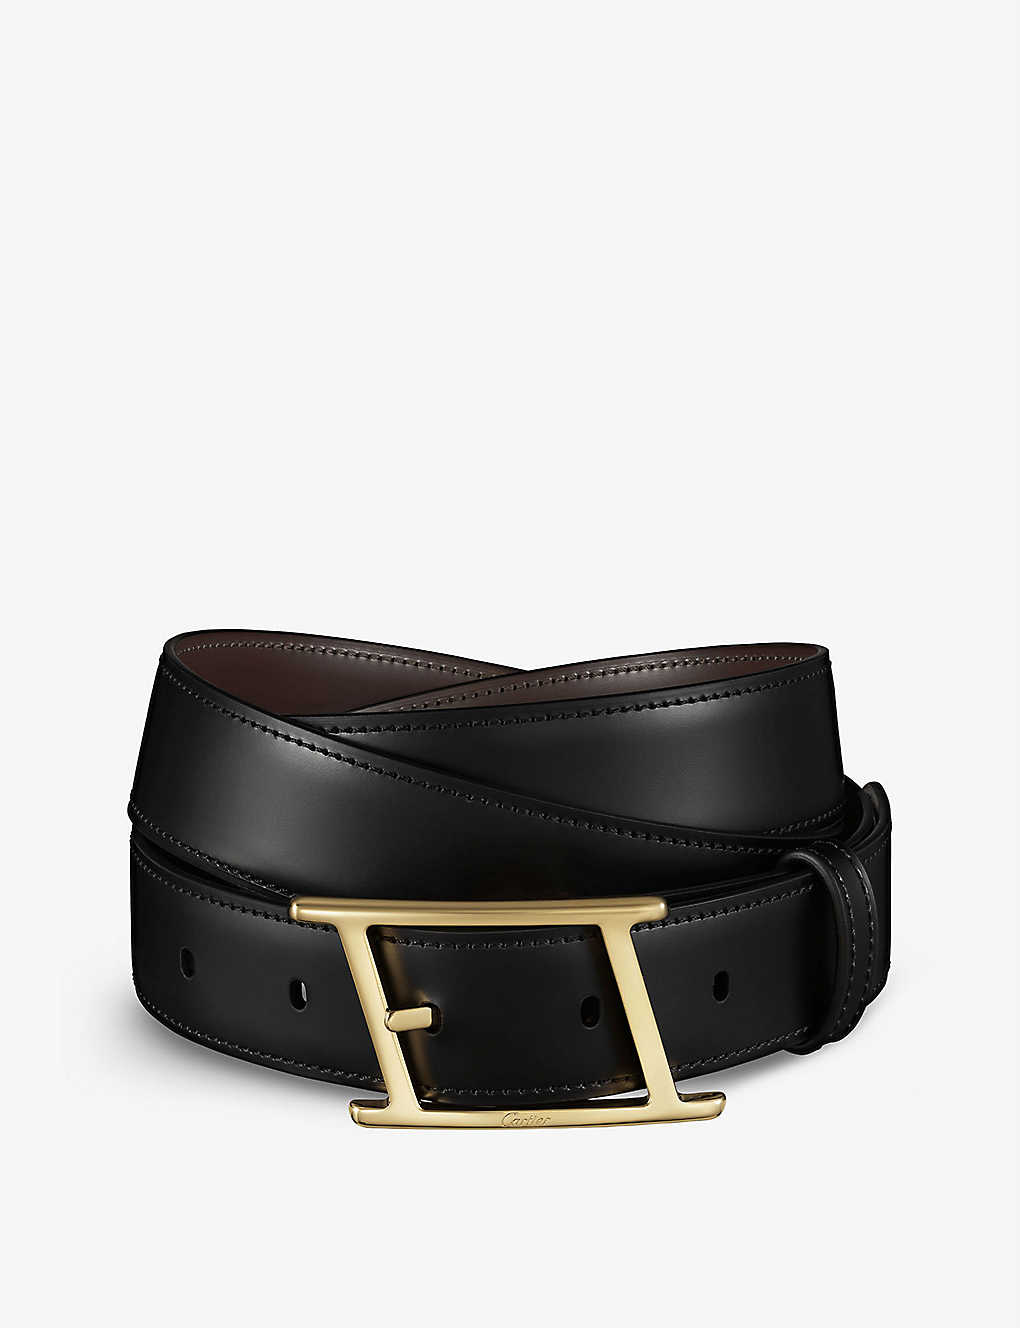 Cartier Tank Asymétrique Slanted-buckle Leather Belt In Black/brown